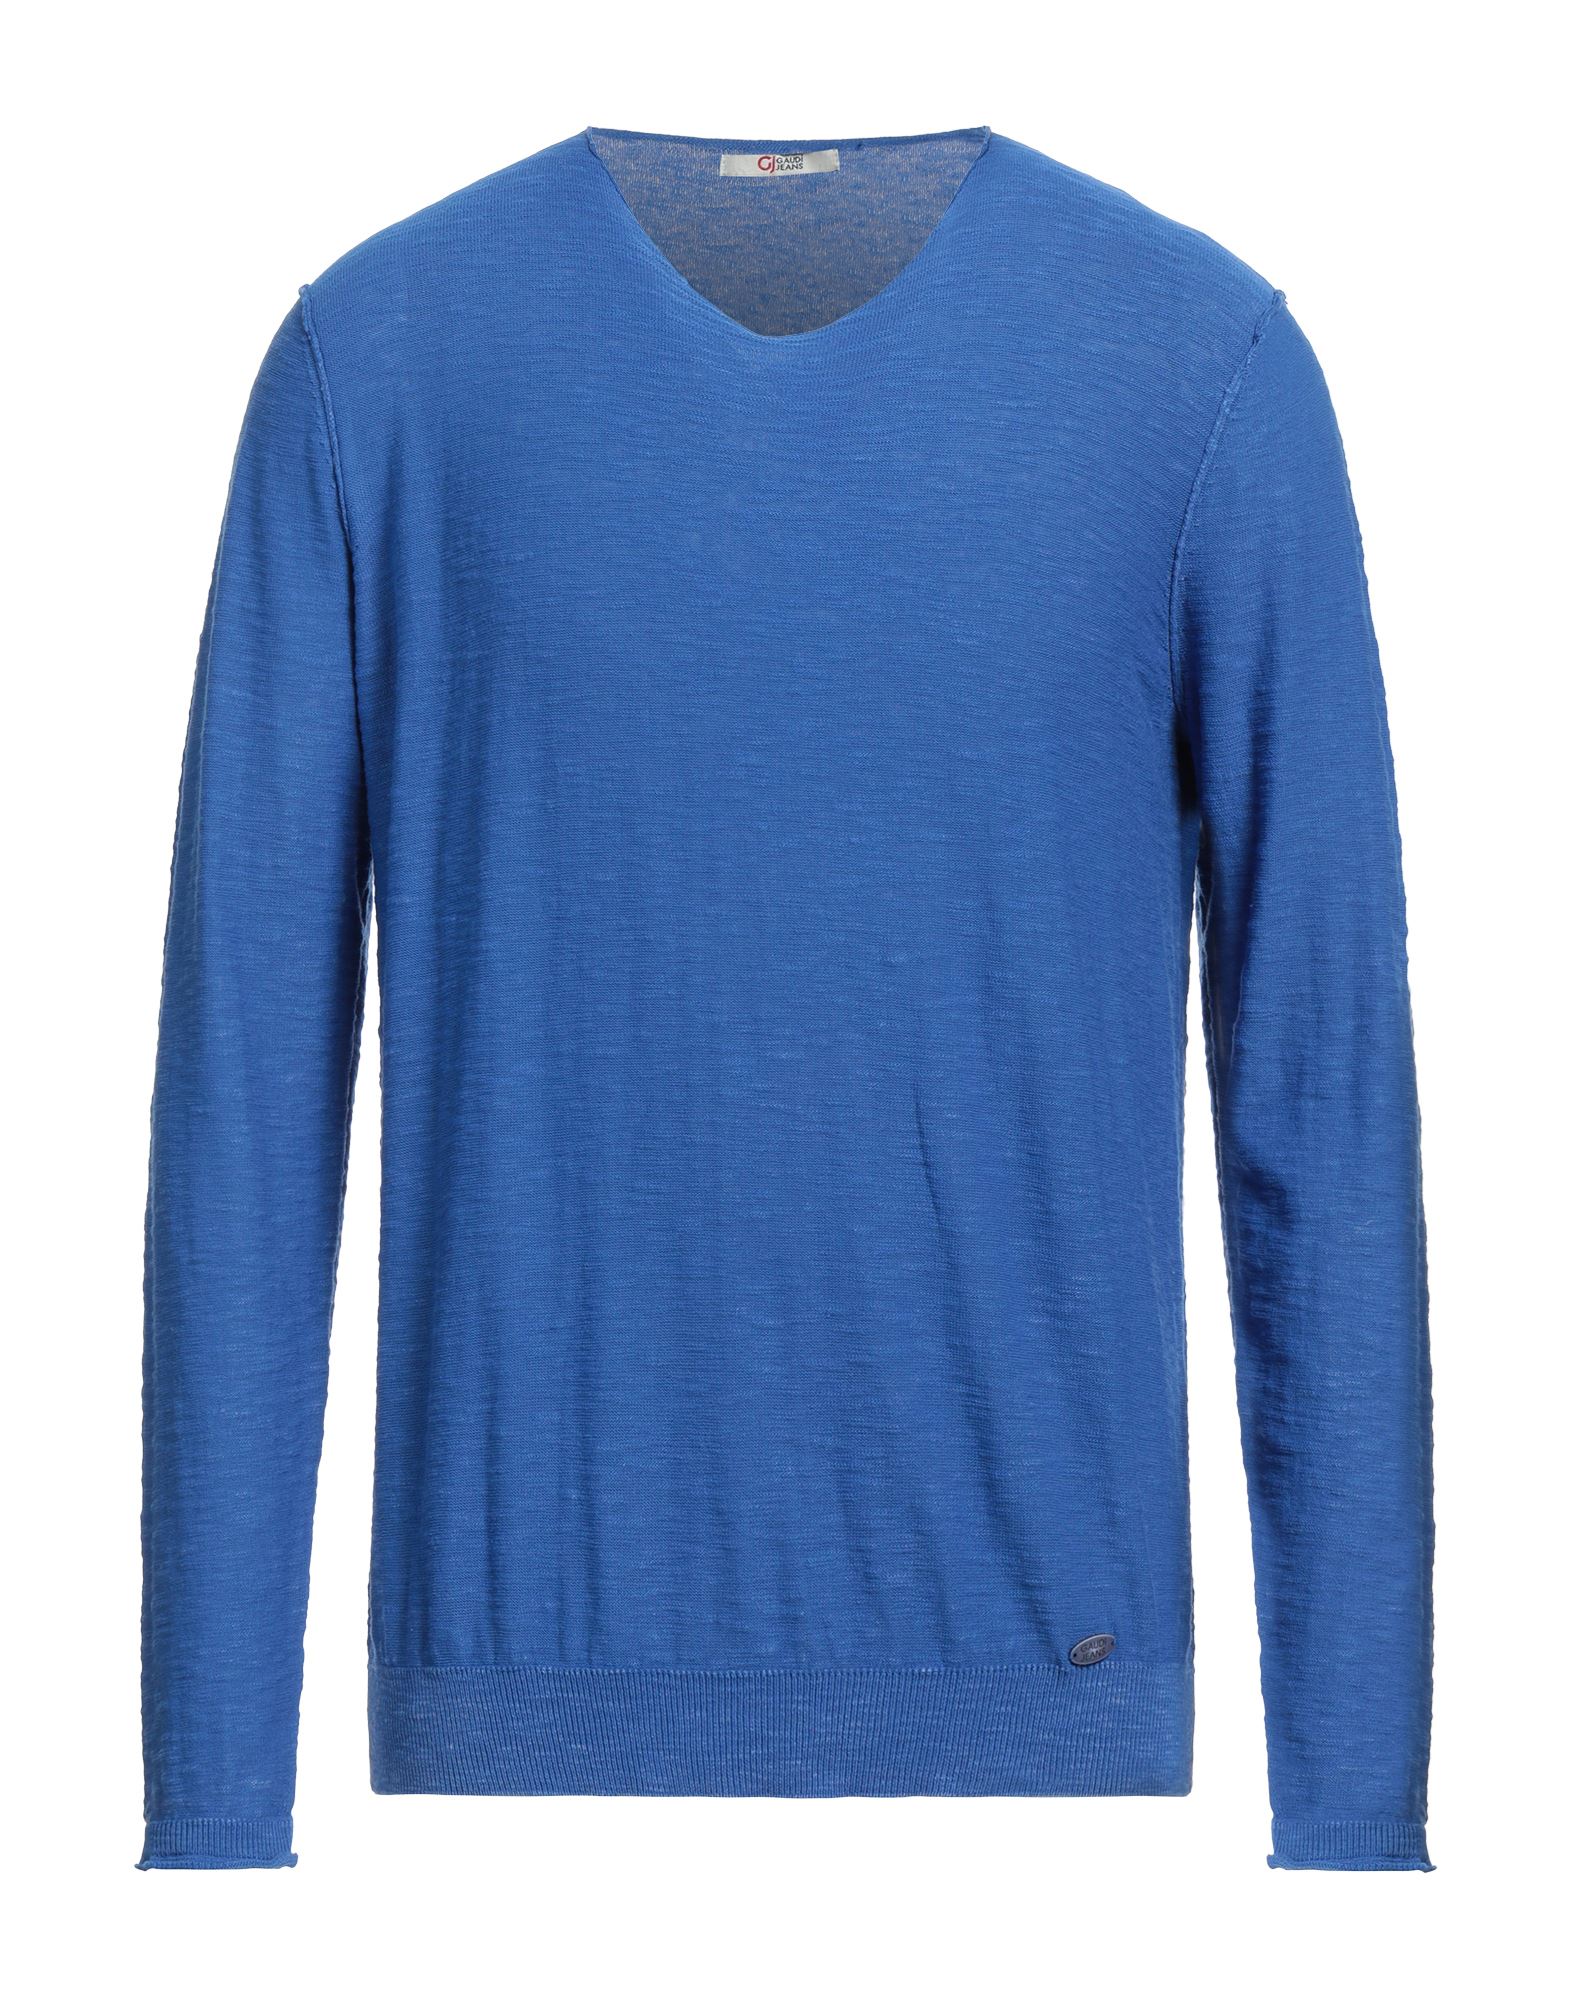 Gaudì Sweaters In Bright Blue